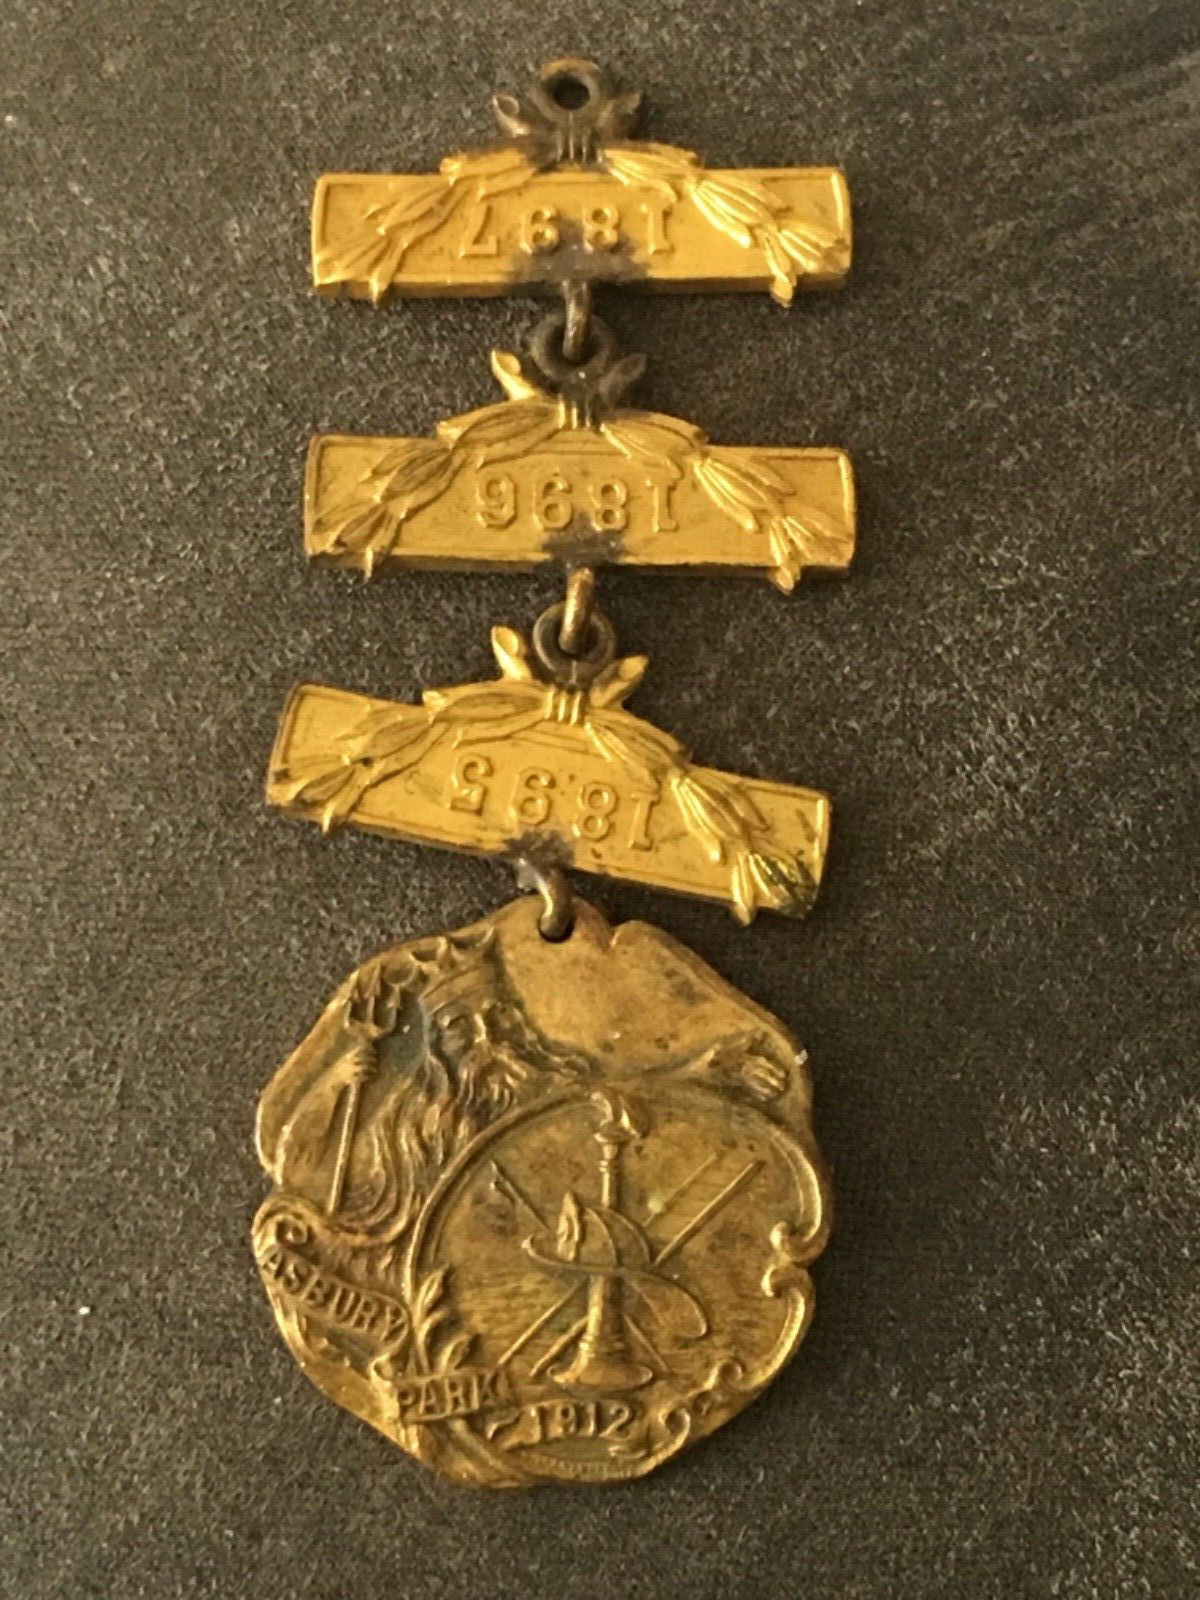 Firemen’s Day & Tournament Medal Asbury Park, NJ 1912 Summit , NJ & 1895-97 Bars